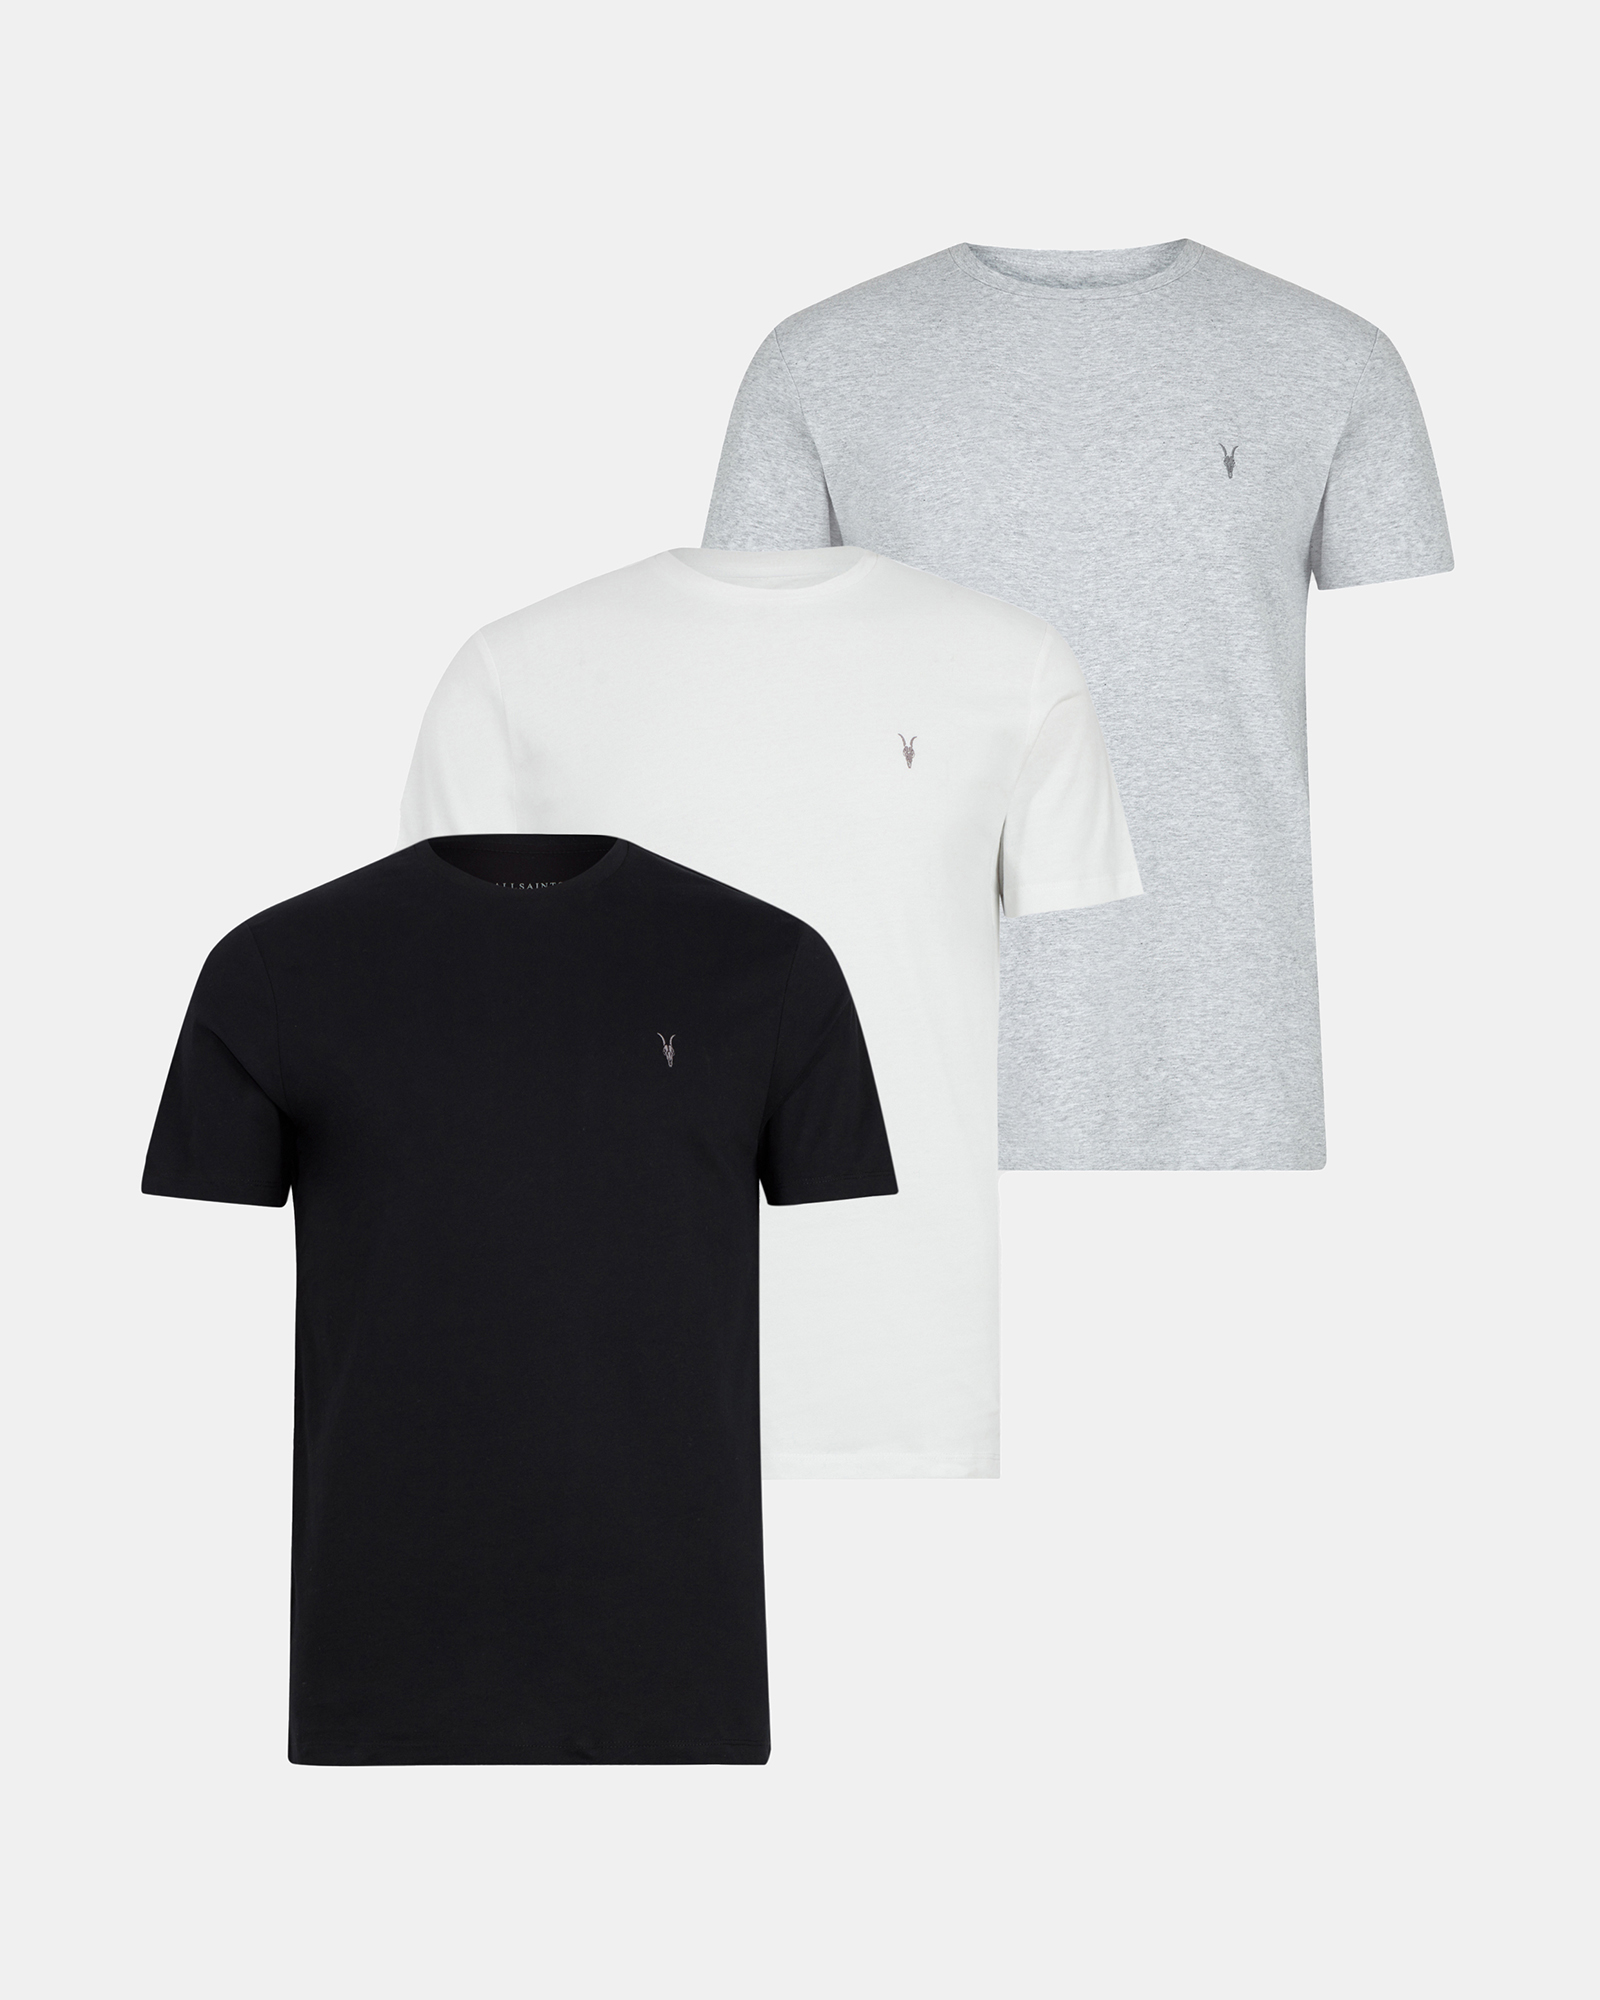 AllSaints Tonic Crew Ramskull T-Shirts 3 Pack,, OPTIC/BLACK/GREY